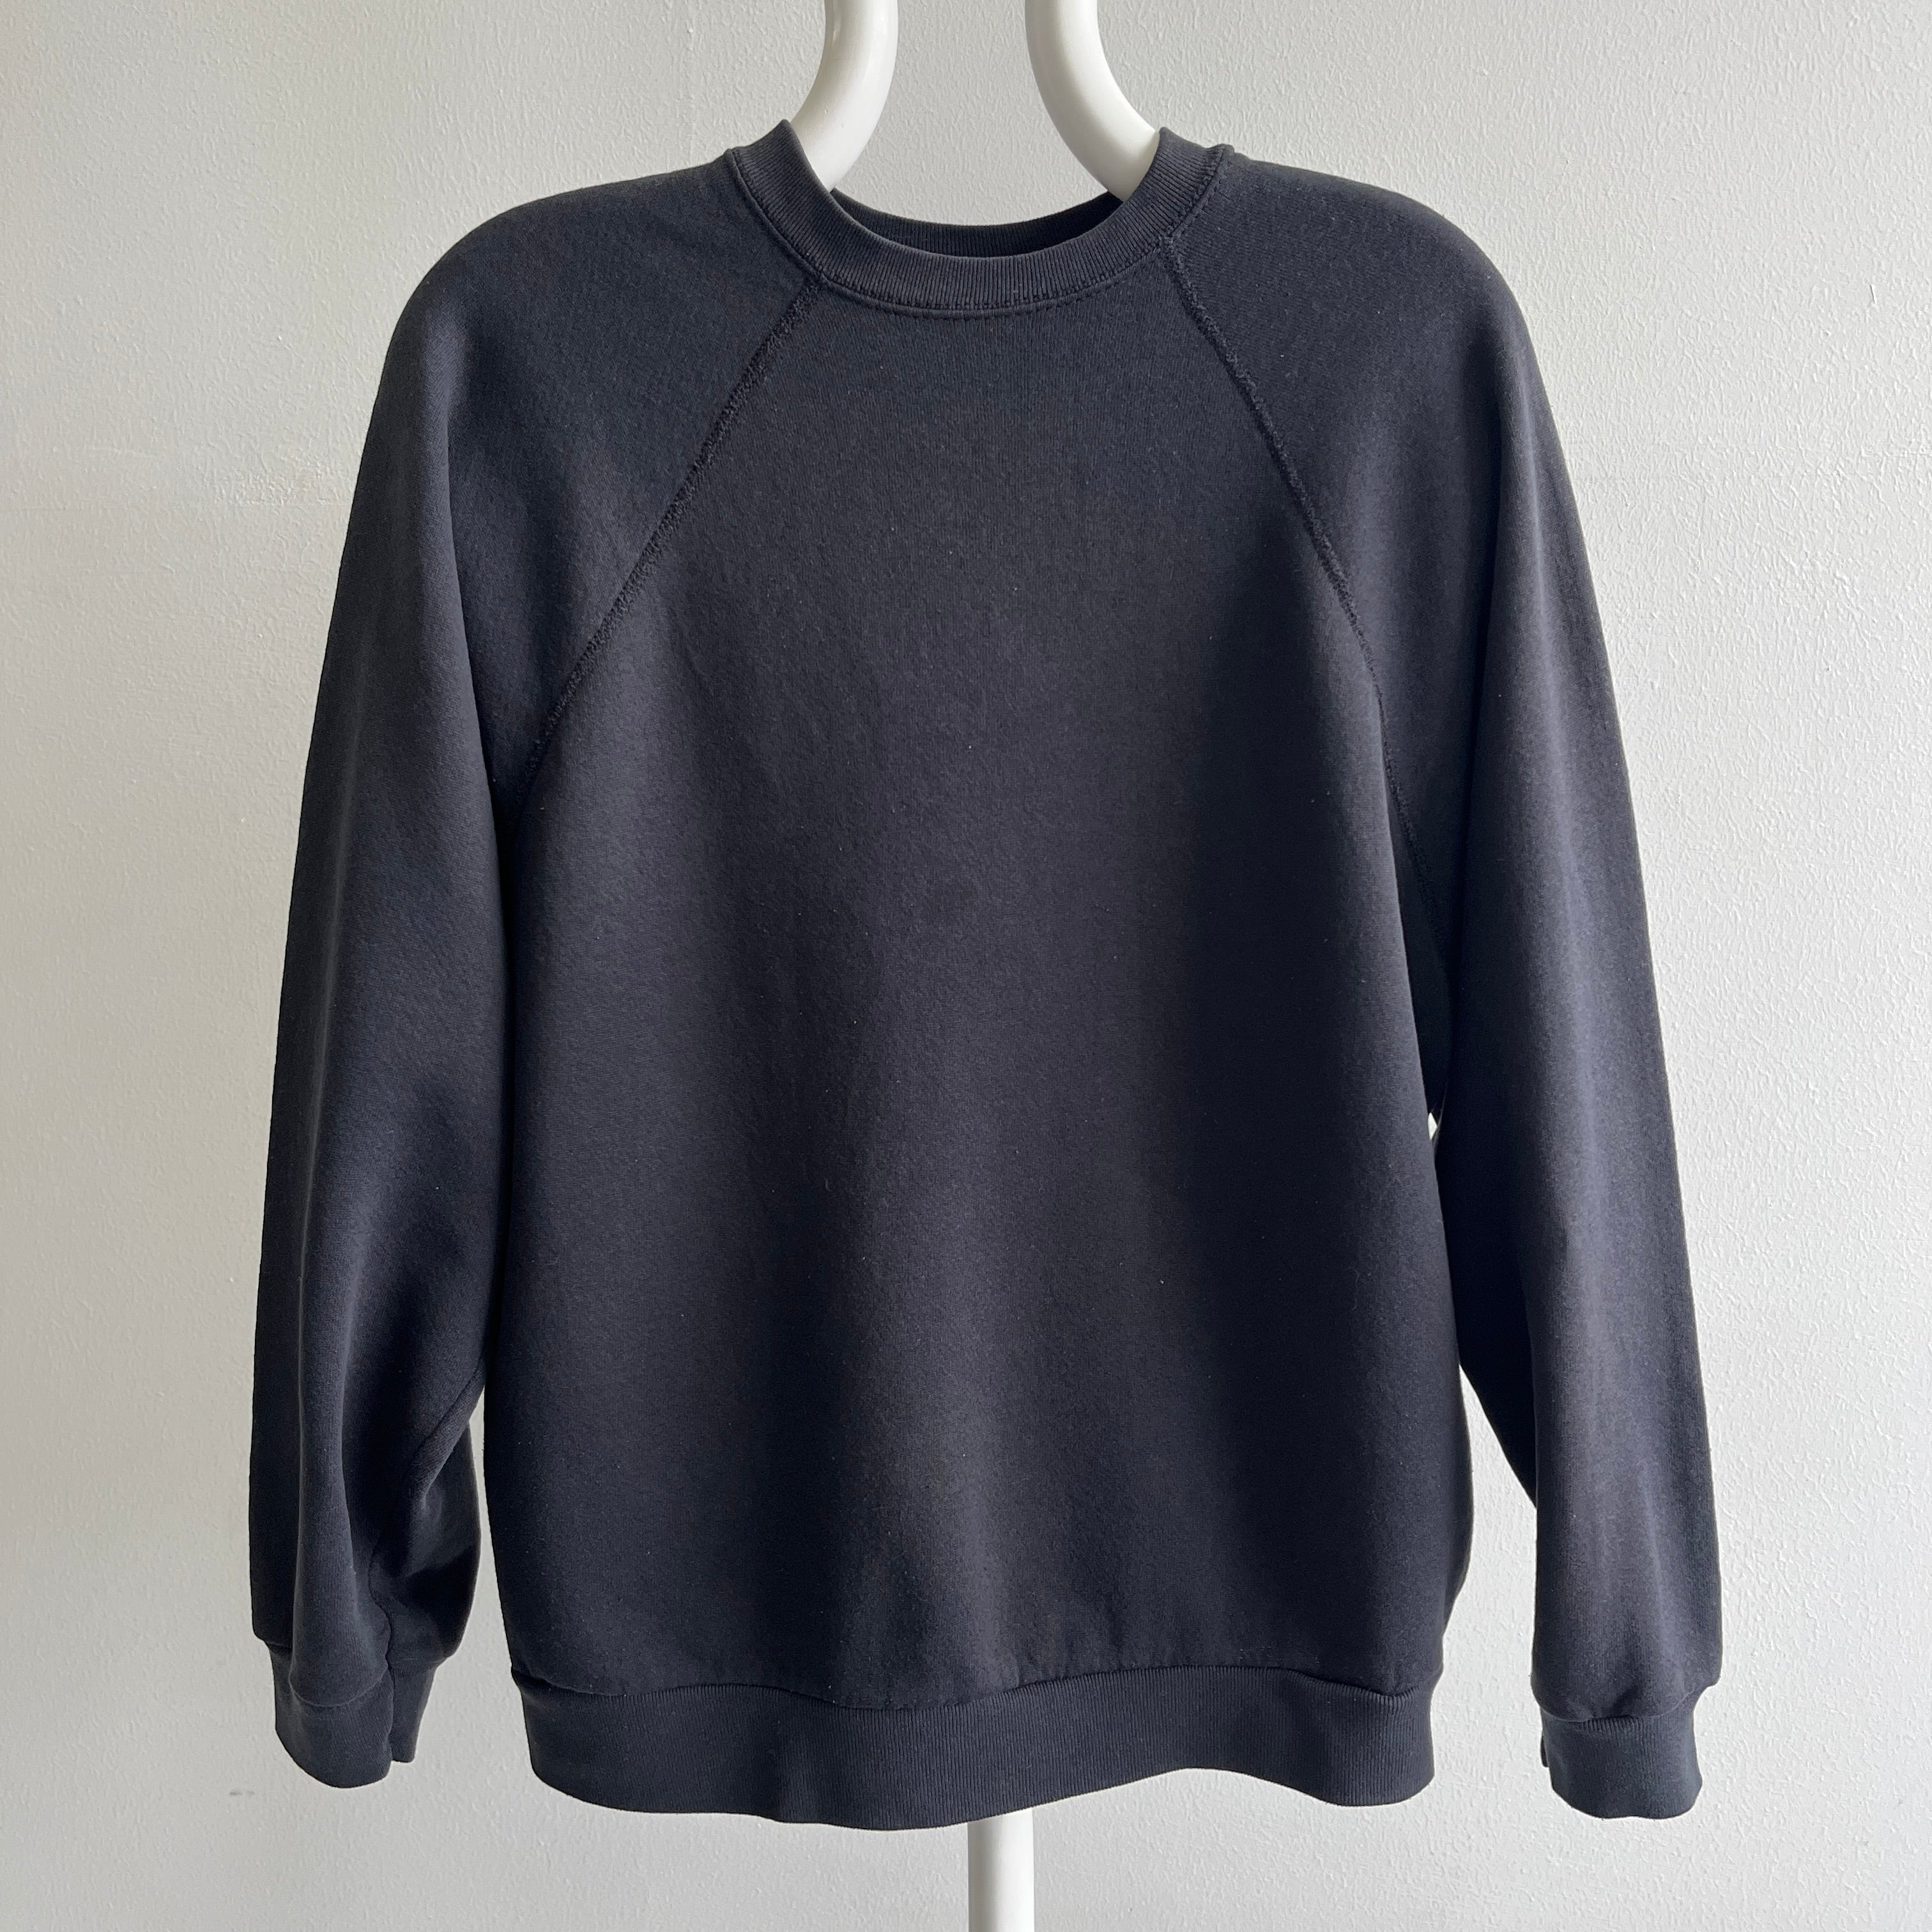 1980s Blank Black Raglan Sweatshirt by Tultex